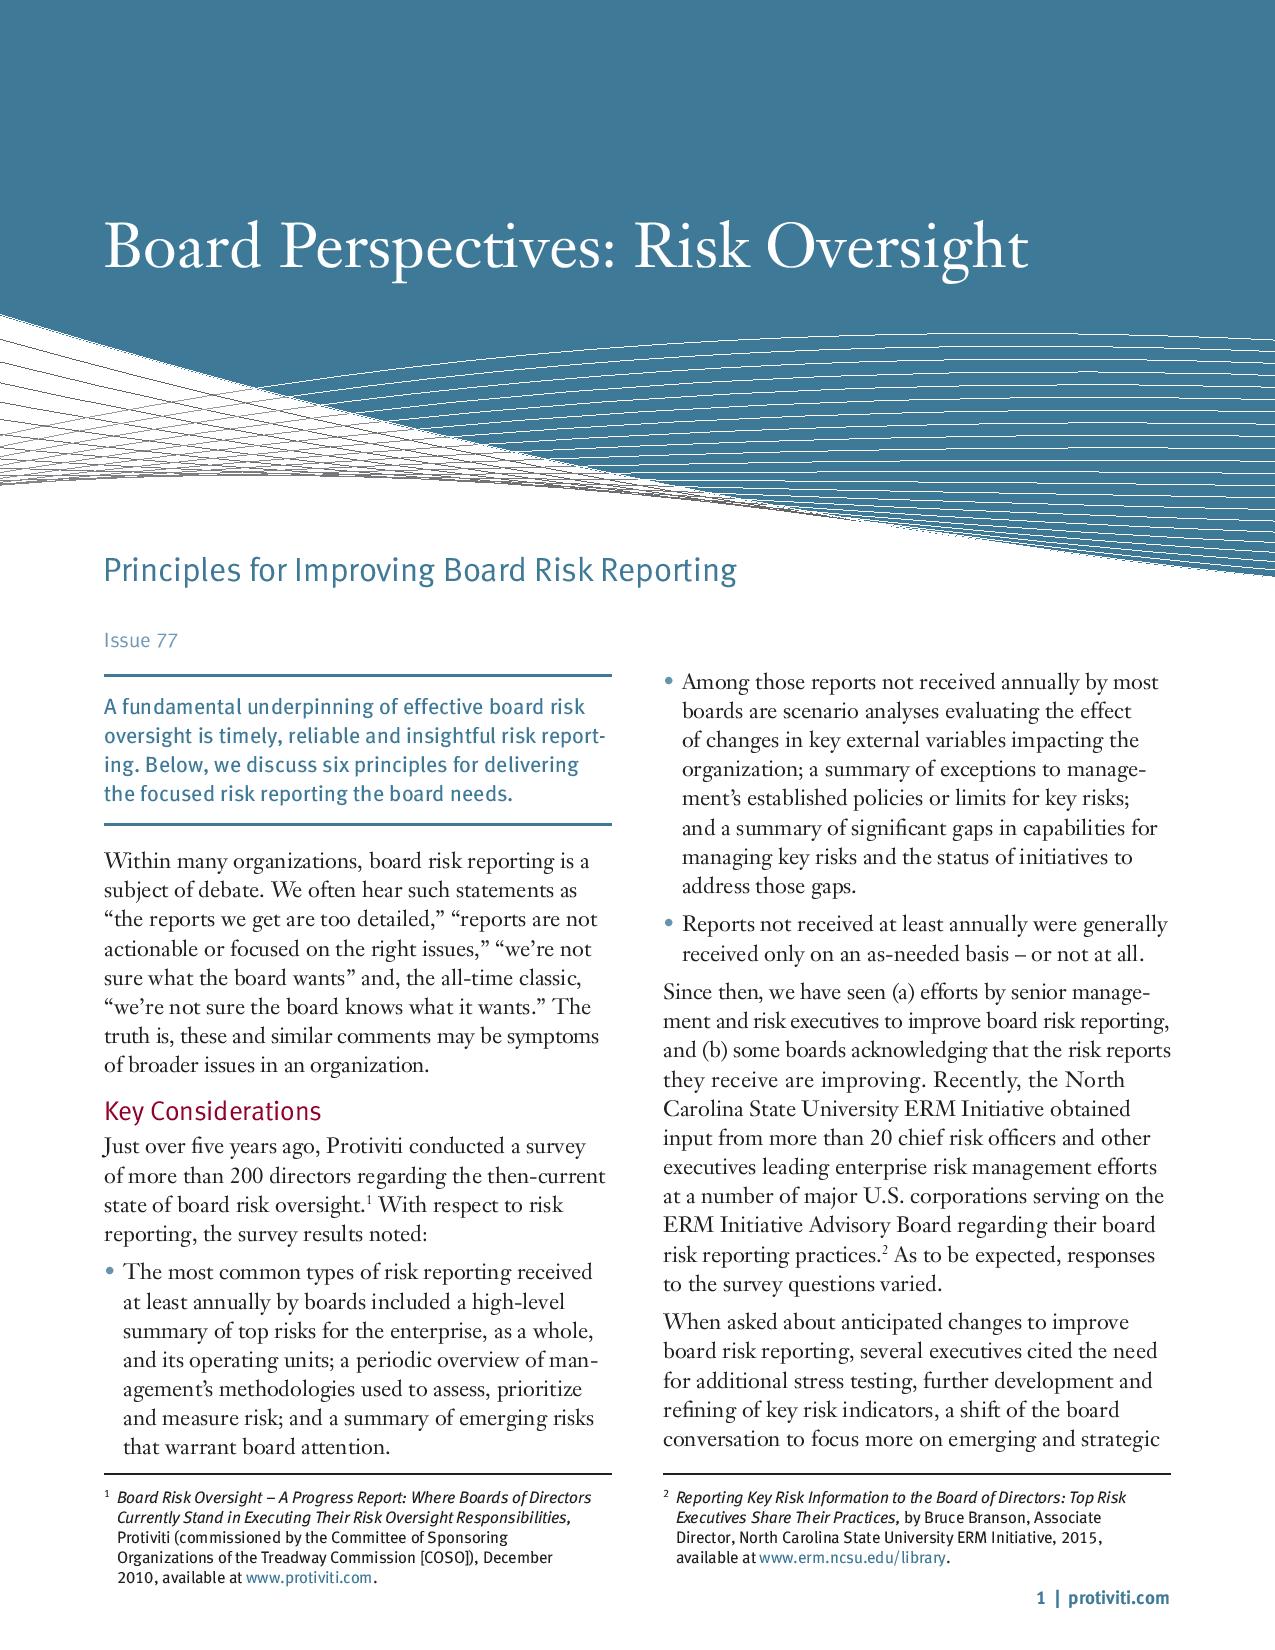 Principles for Improving Board Risk Reporting